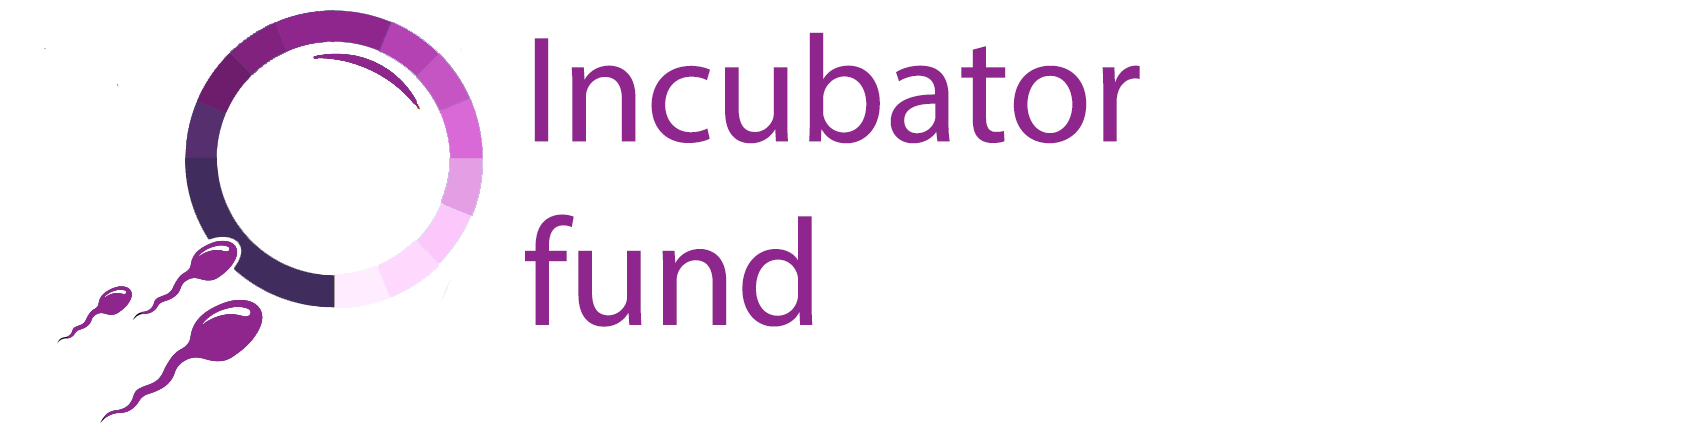 Incubator fund logo